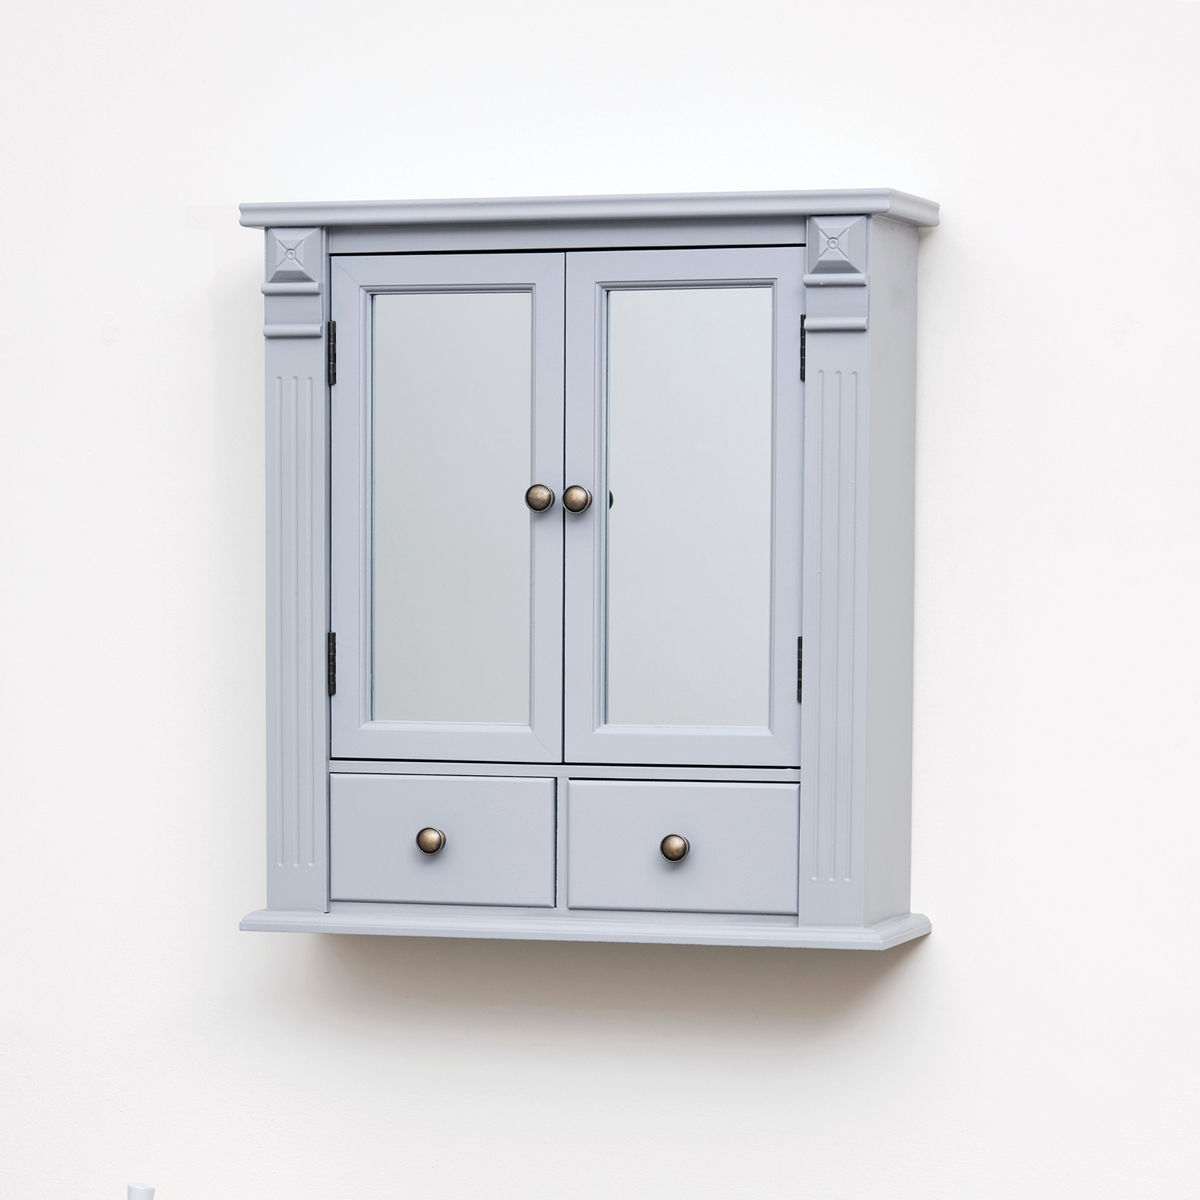 Grey Mirrored Bathroom Cabinet with Drawer Storage